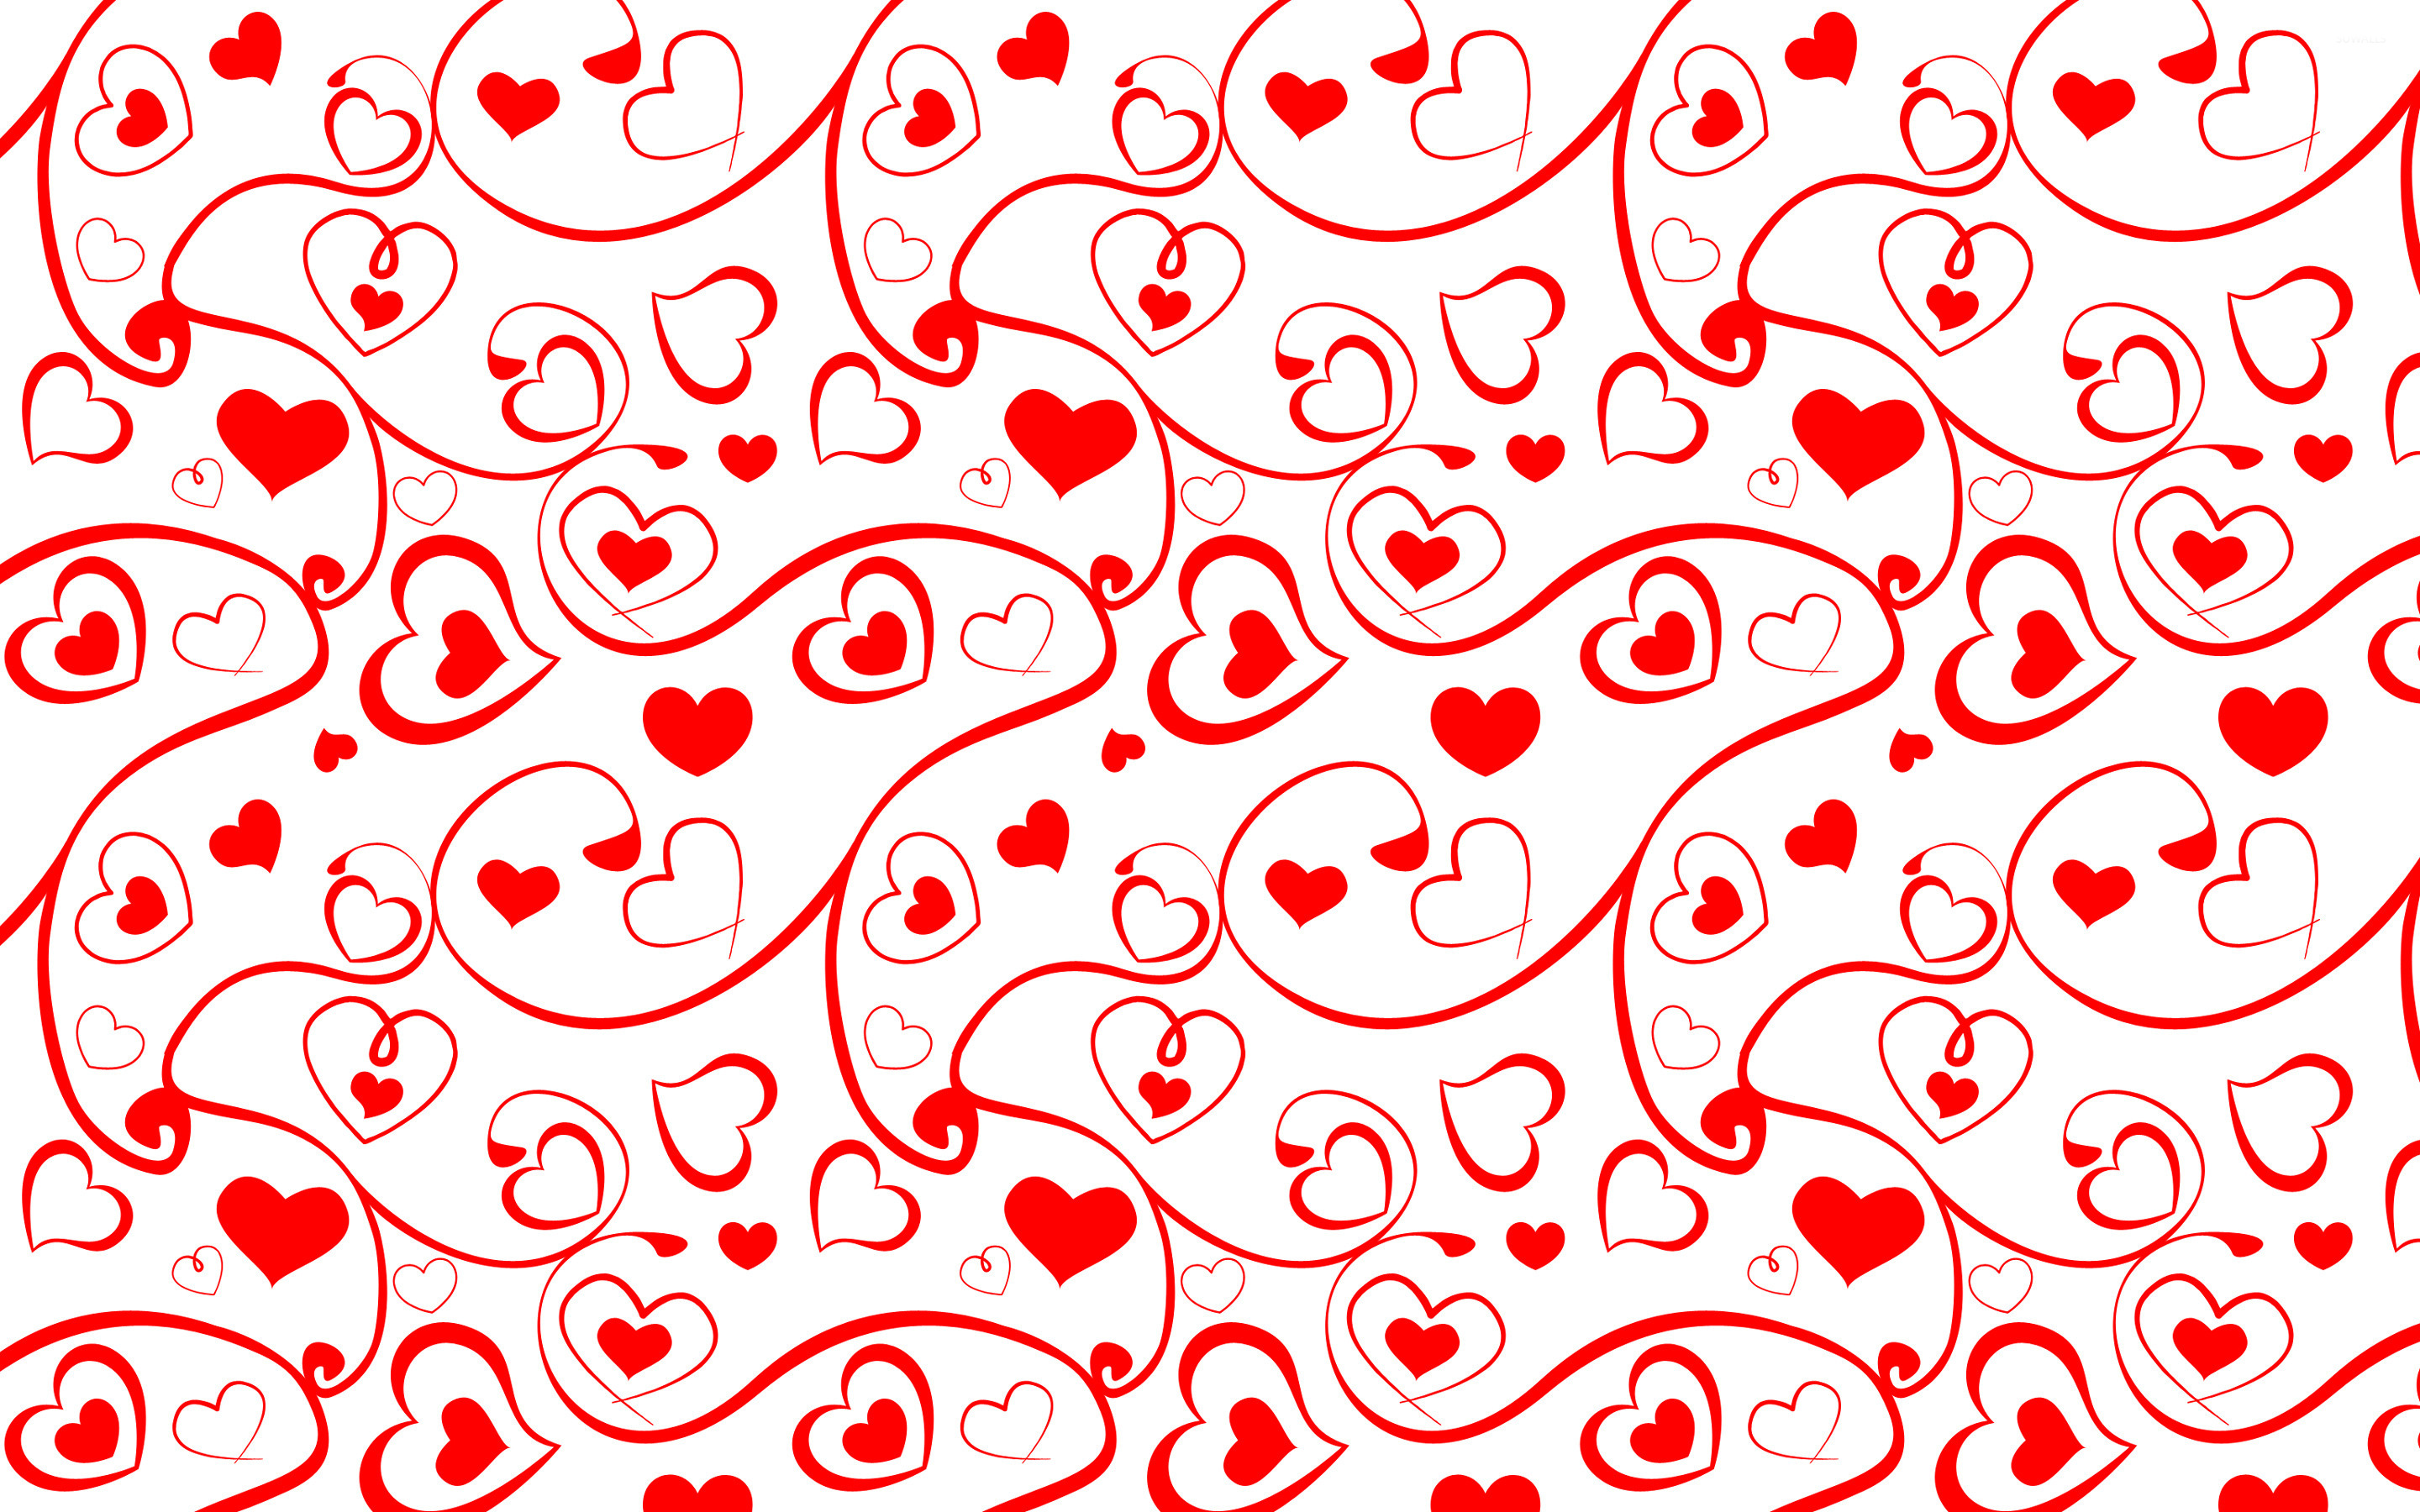 Heart and swirl pattern wallpaper wallpaper